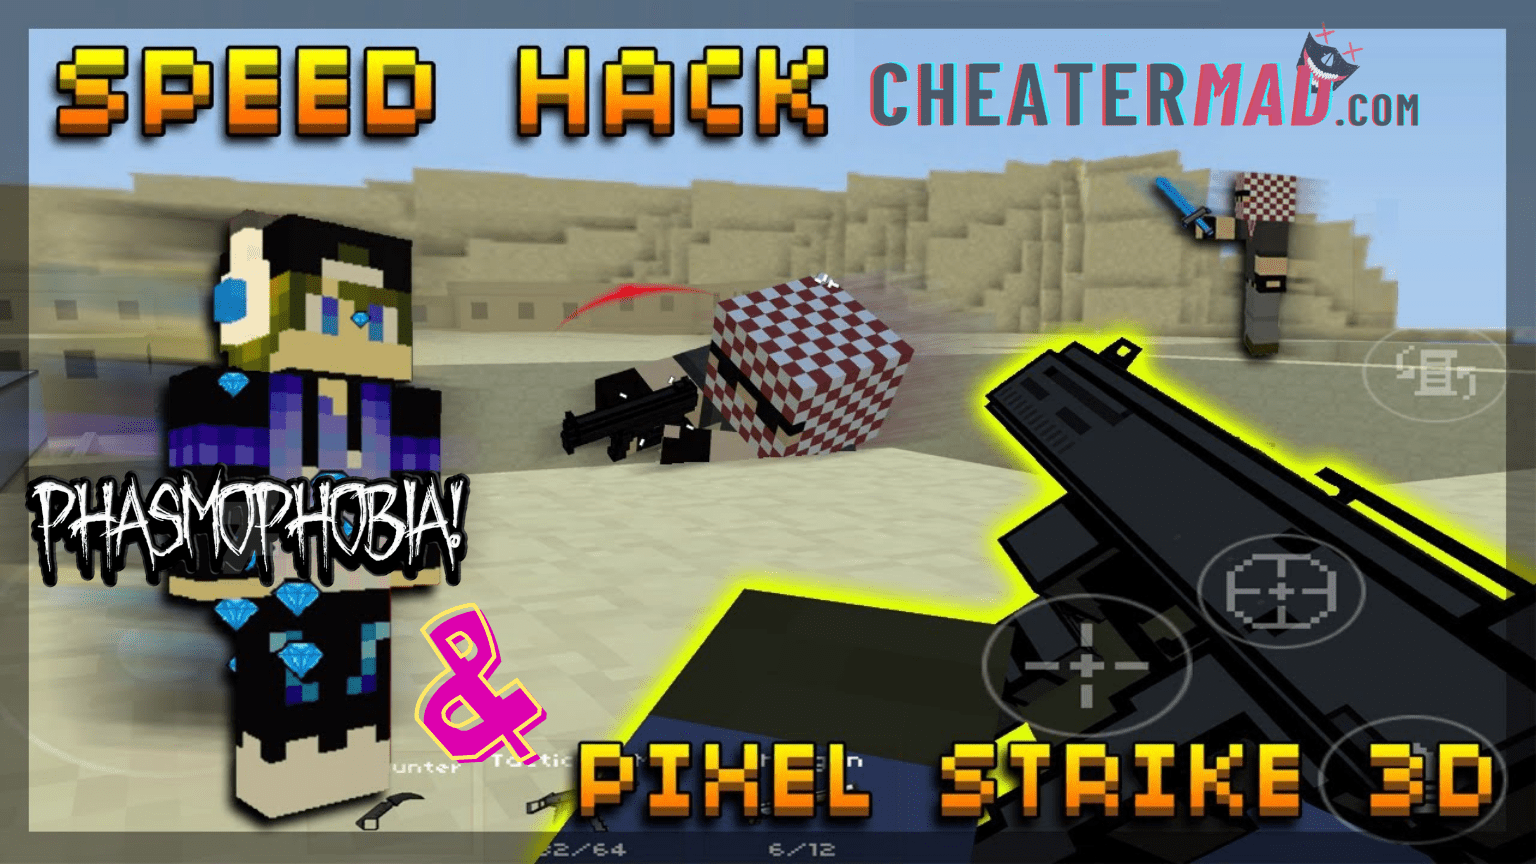 Universal Speedhack Pixel Strike 3d Phasmophobia Secret Neighbour Dead Raid Cheatermad Com - roblox speed hack any game 2021